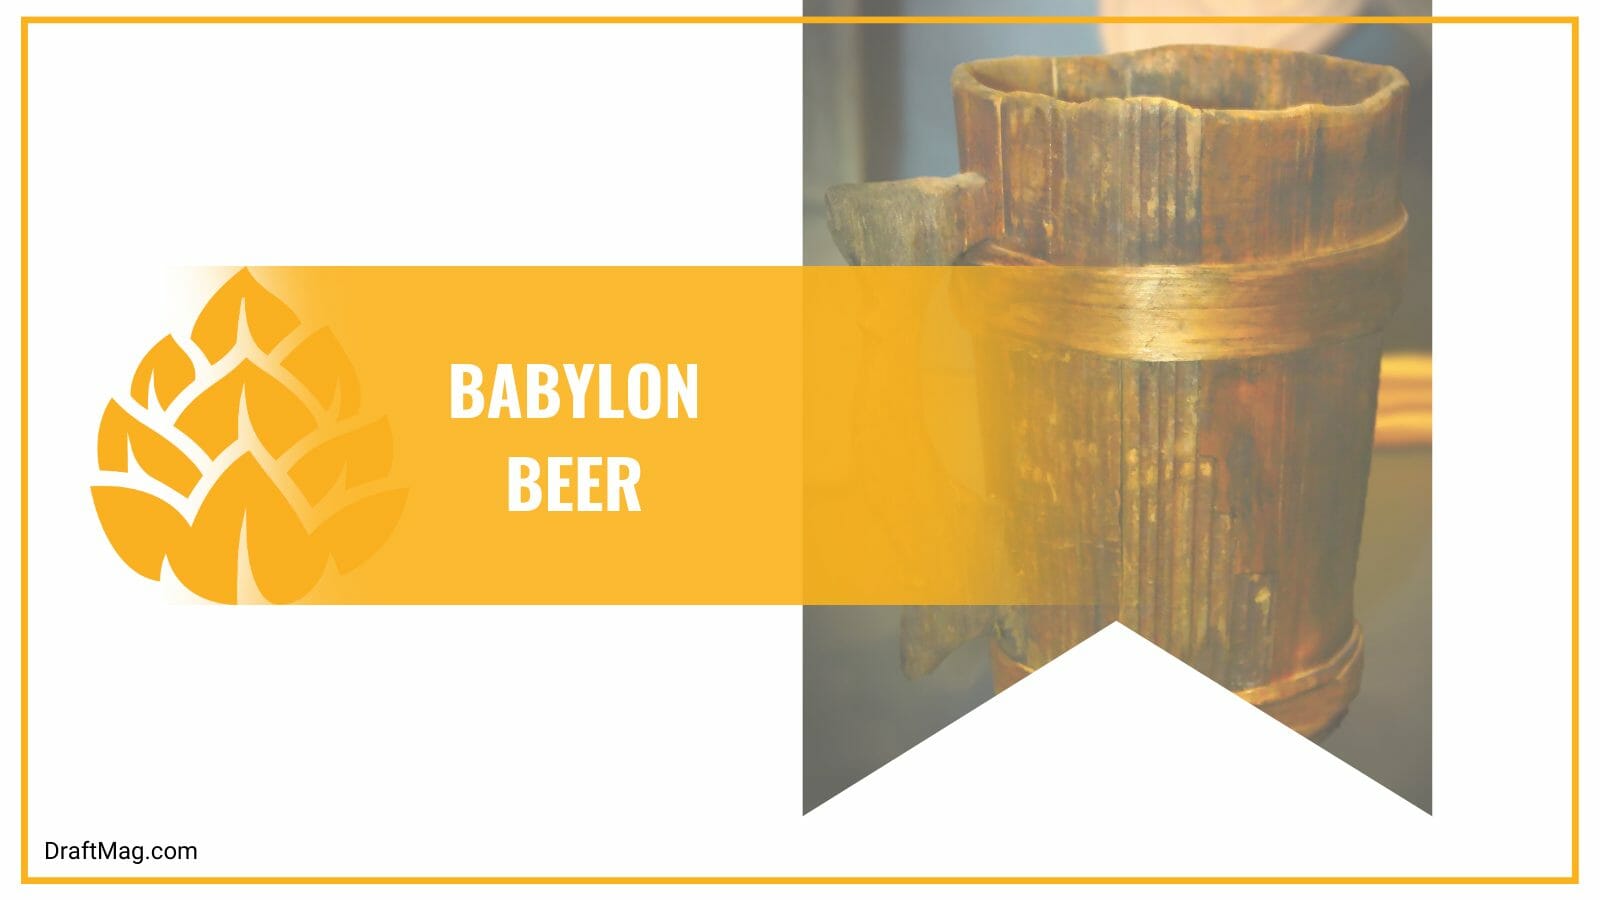 Babylon beer